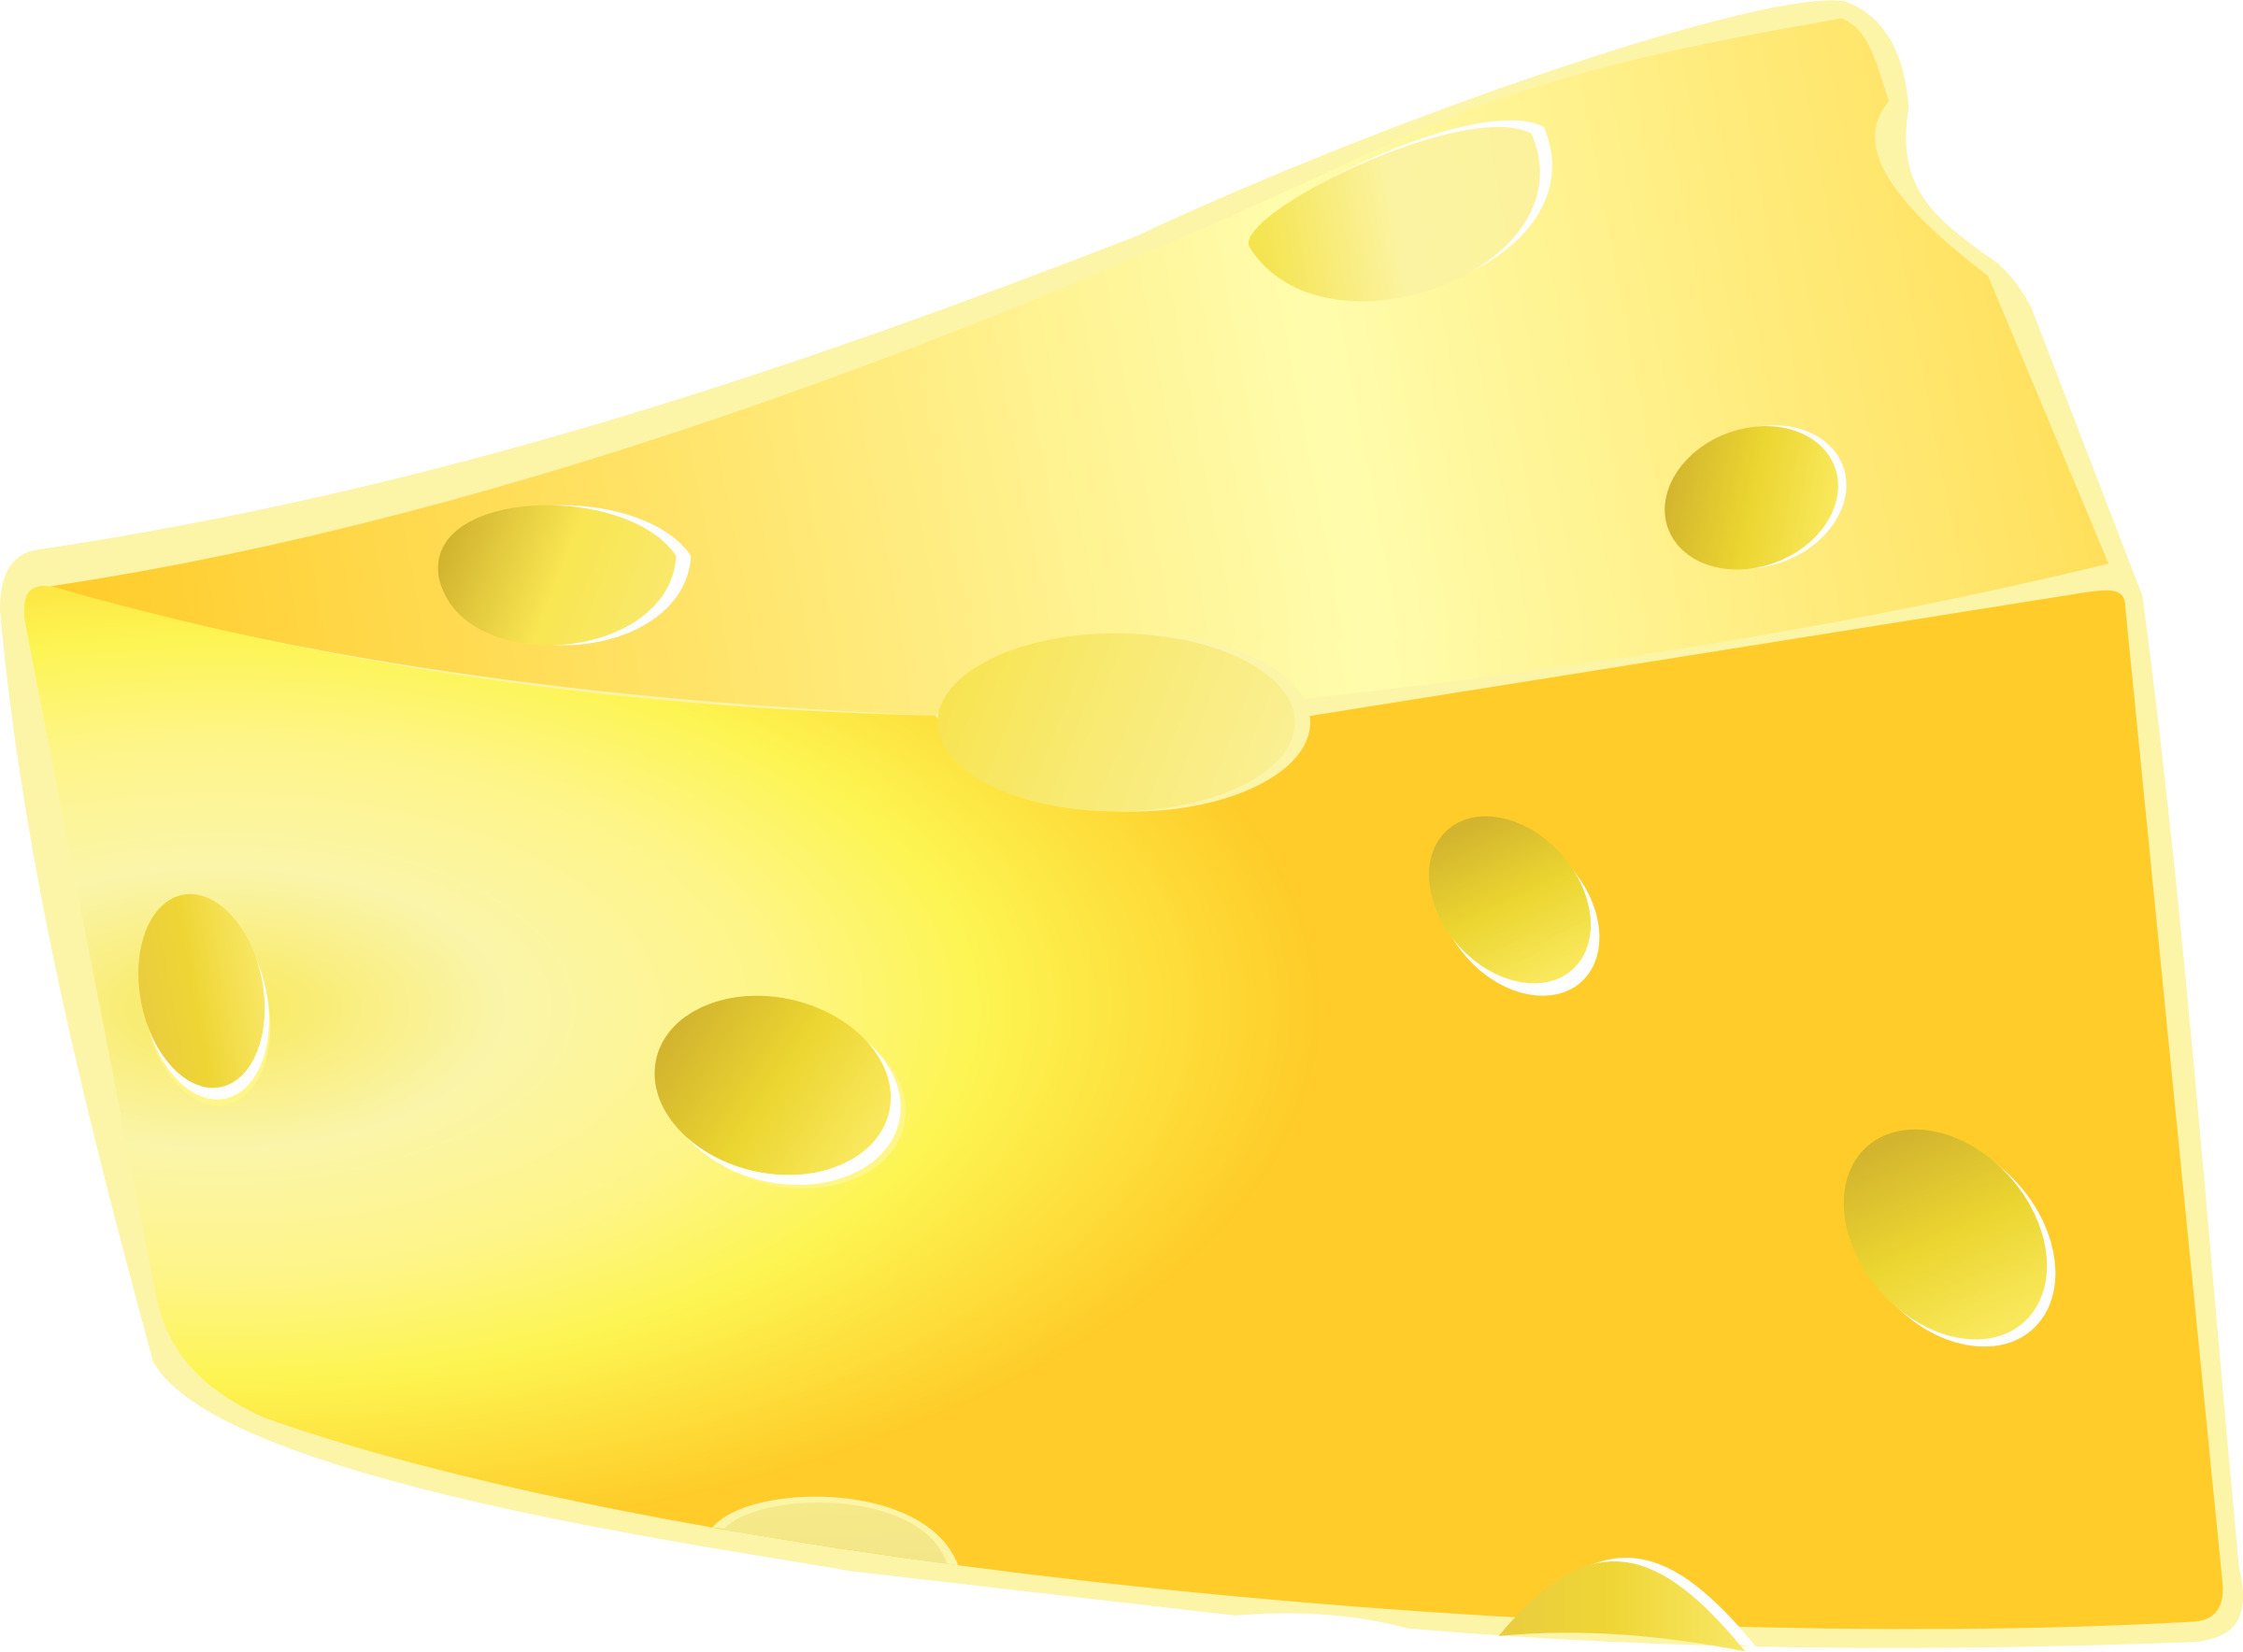 Swiss Cheese By Gdj